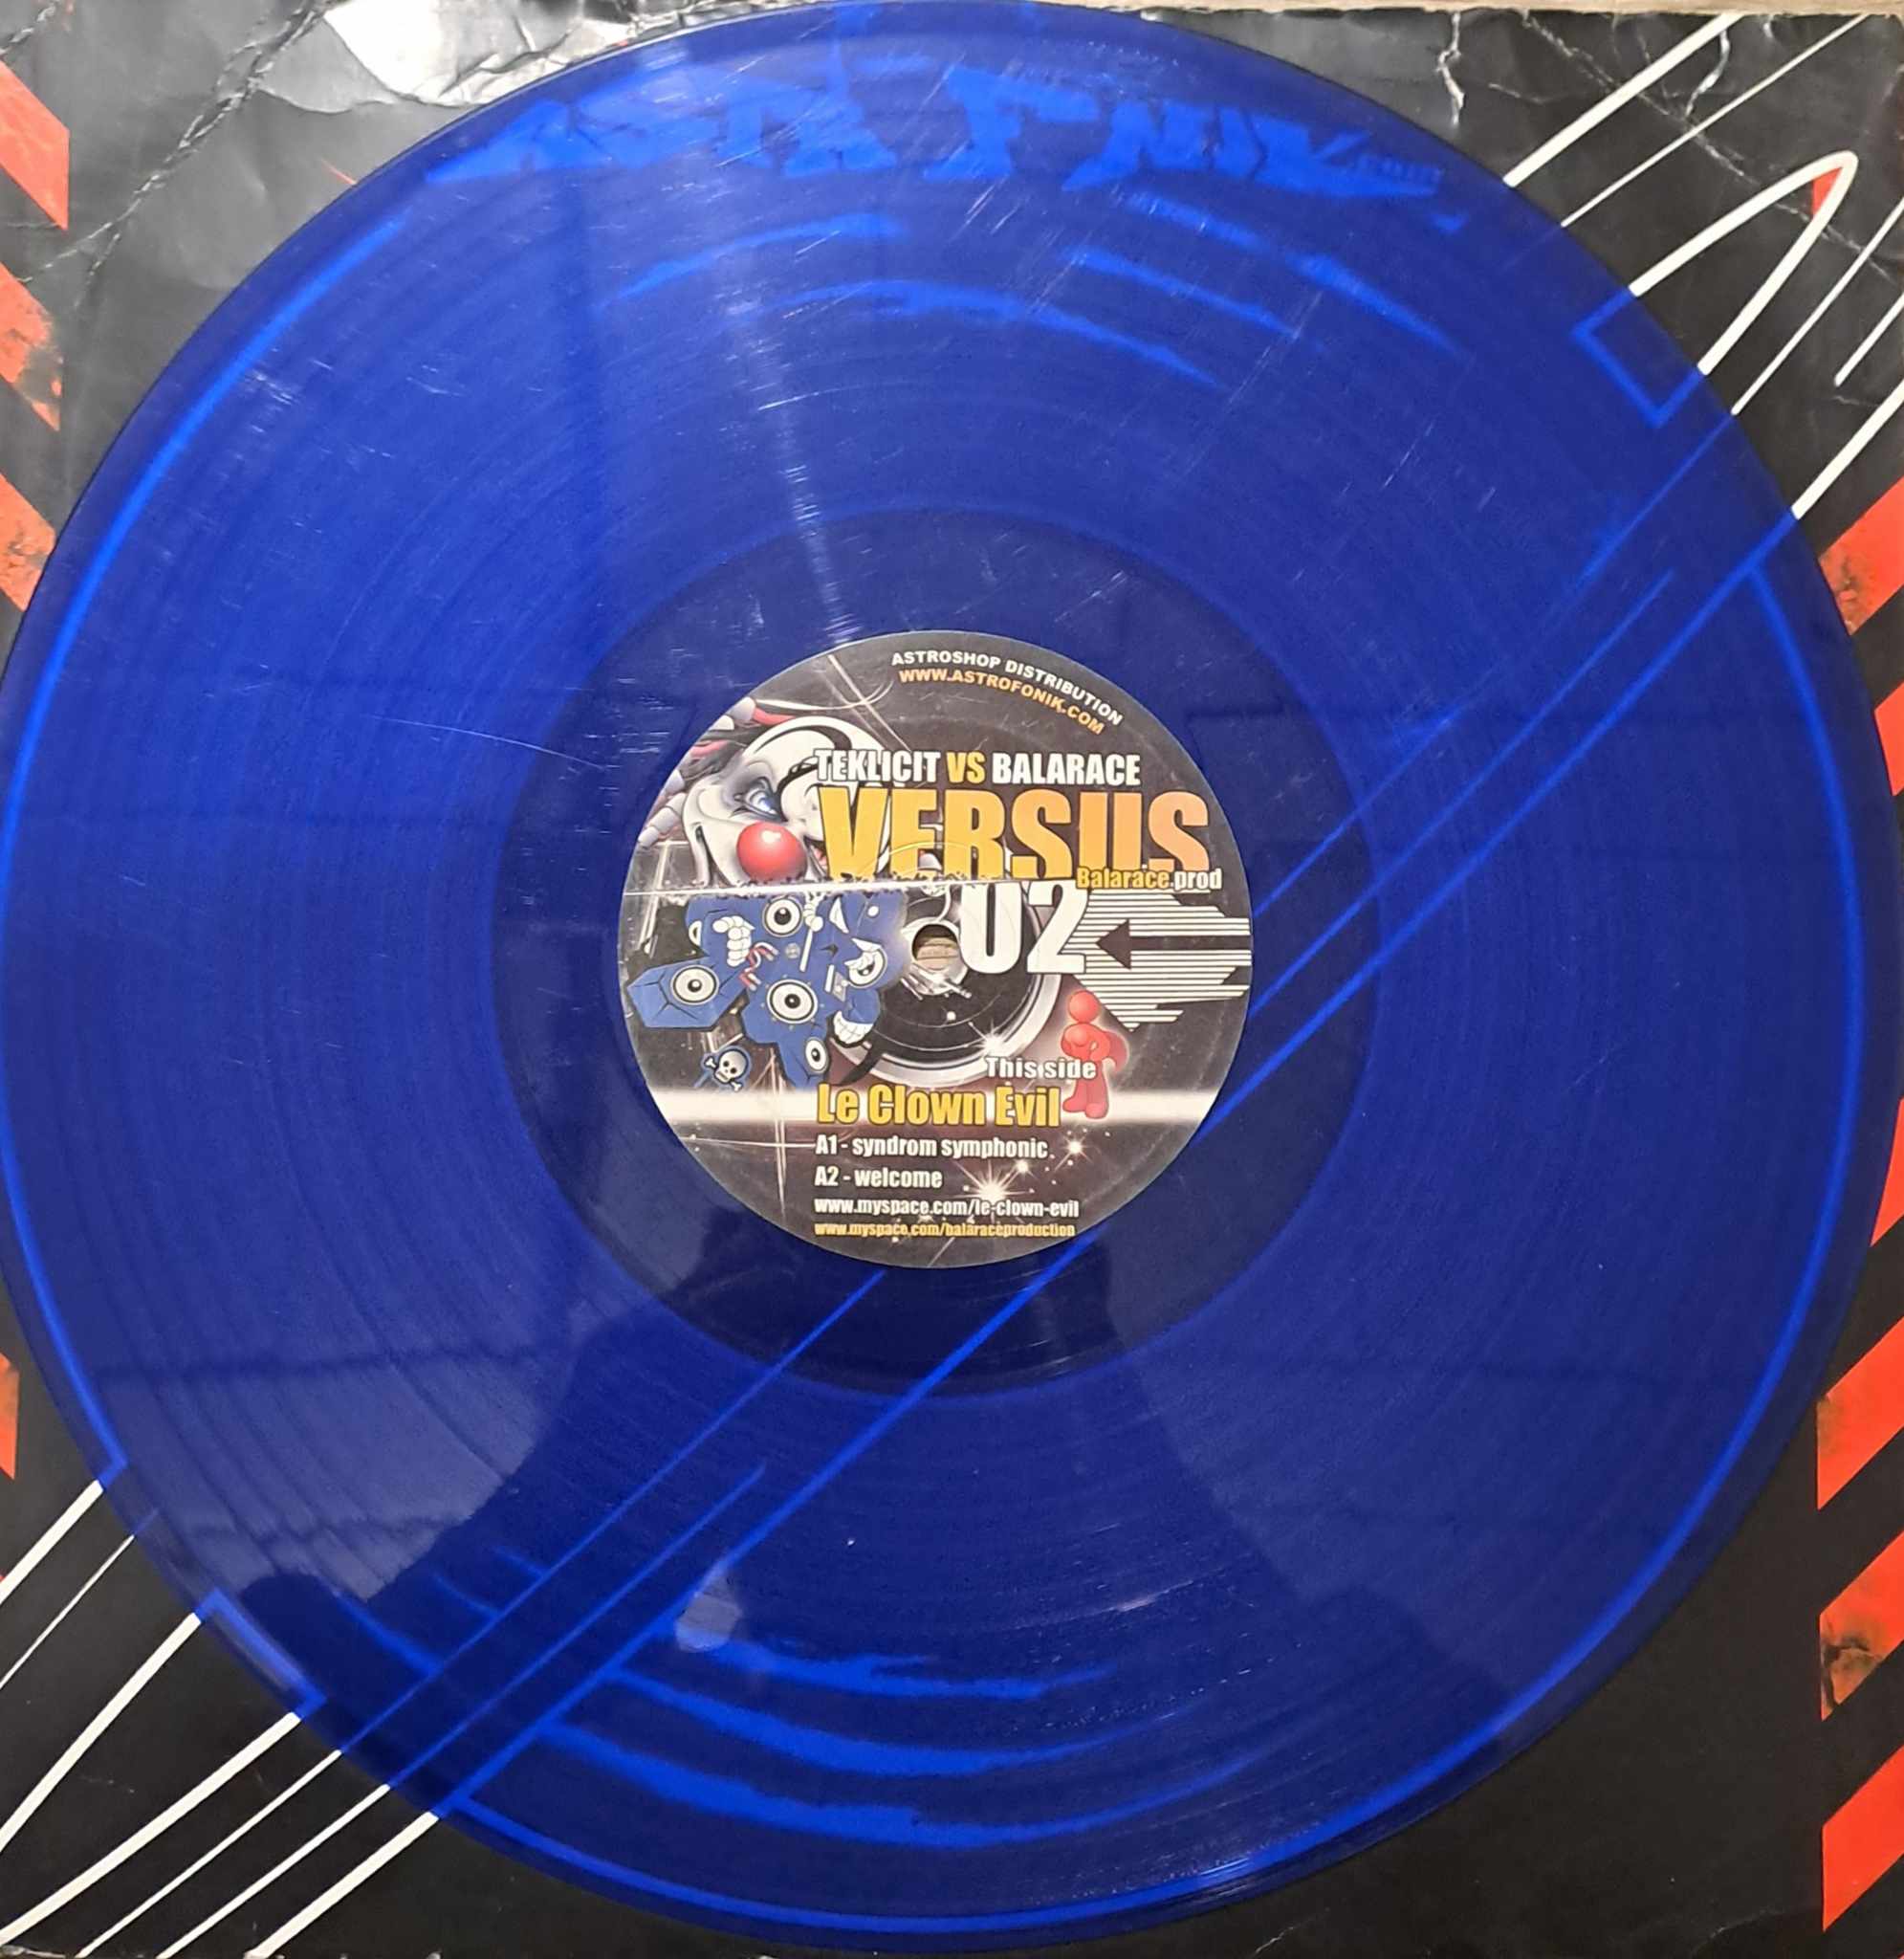 Versus 02 (bleu) - vinyle tribecore